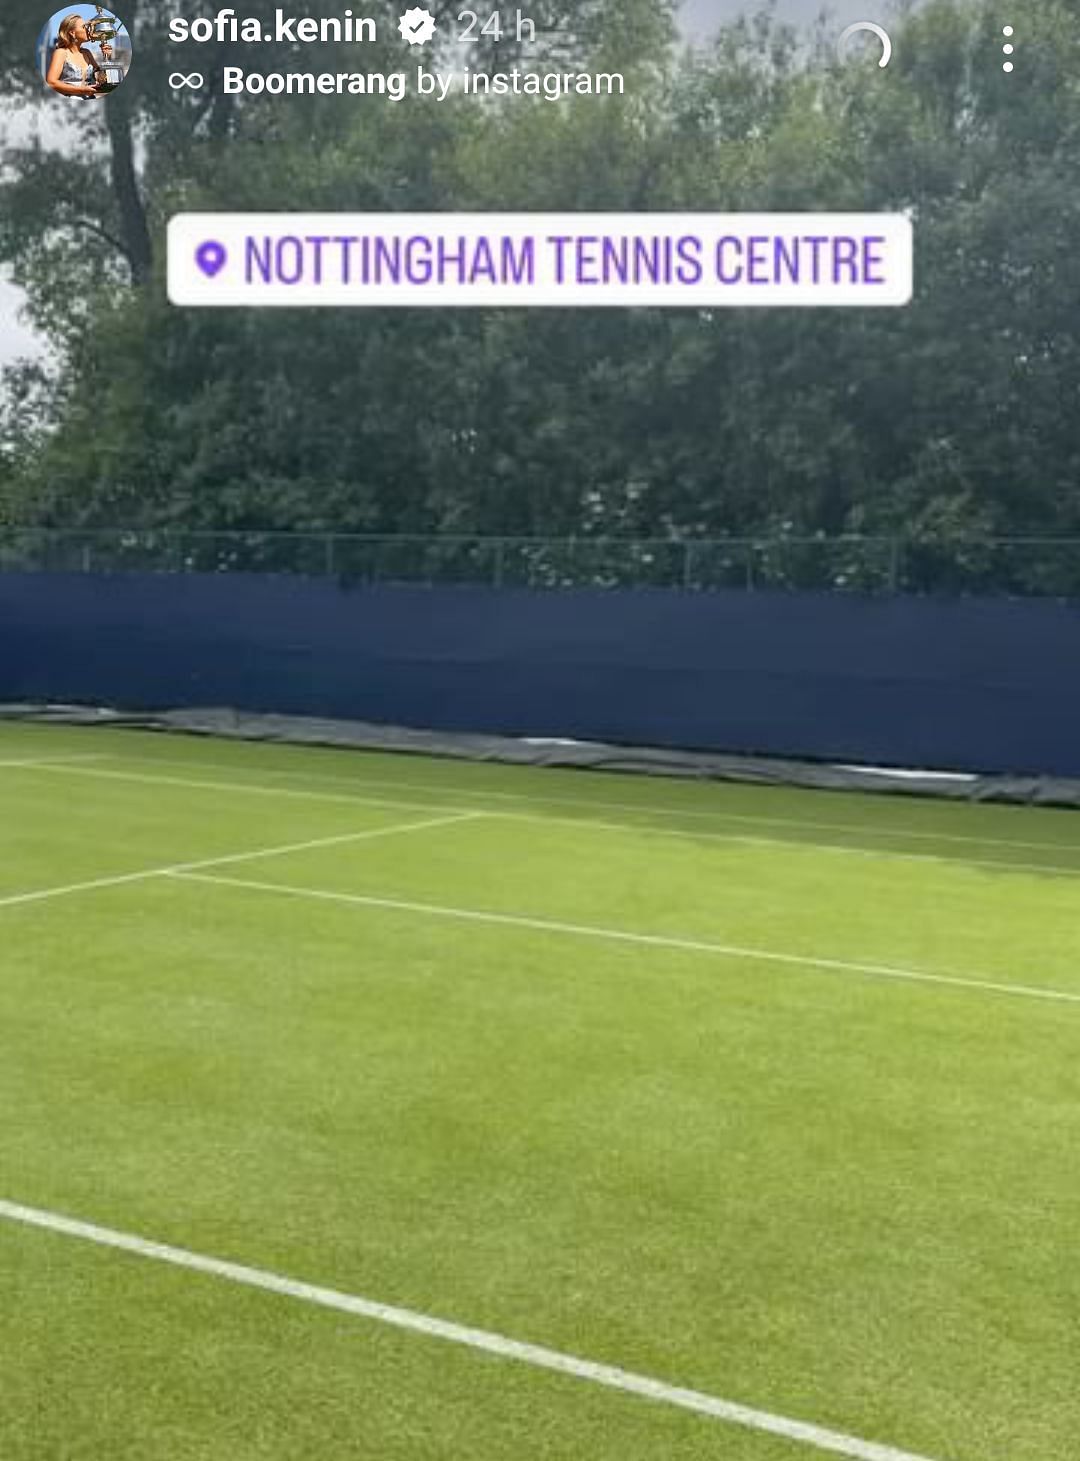 Sofia Kenin at the Nottingham tennis center